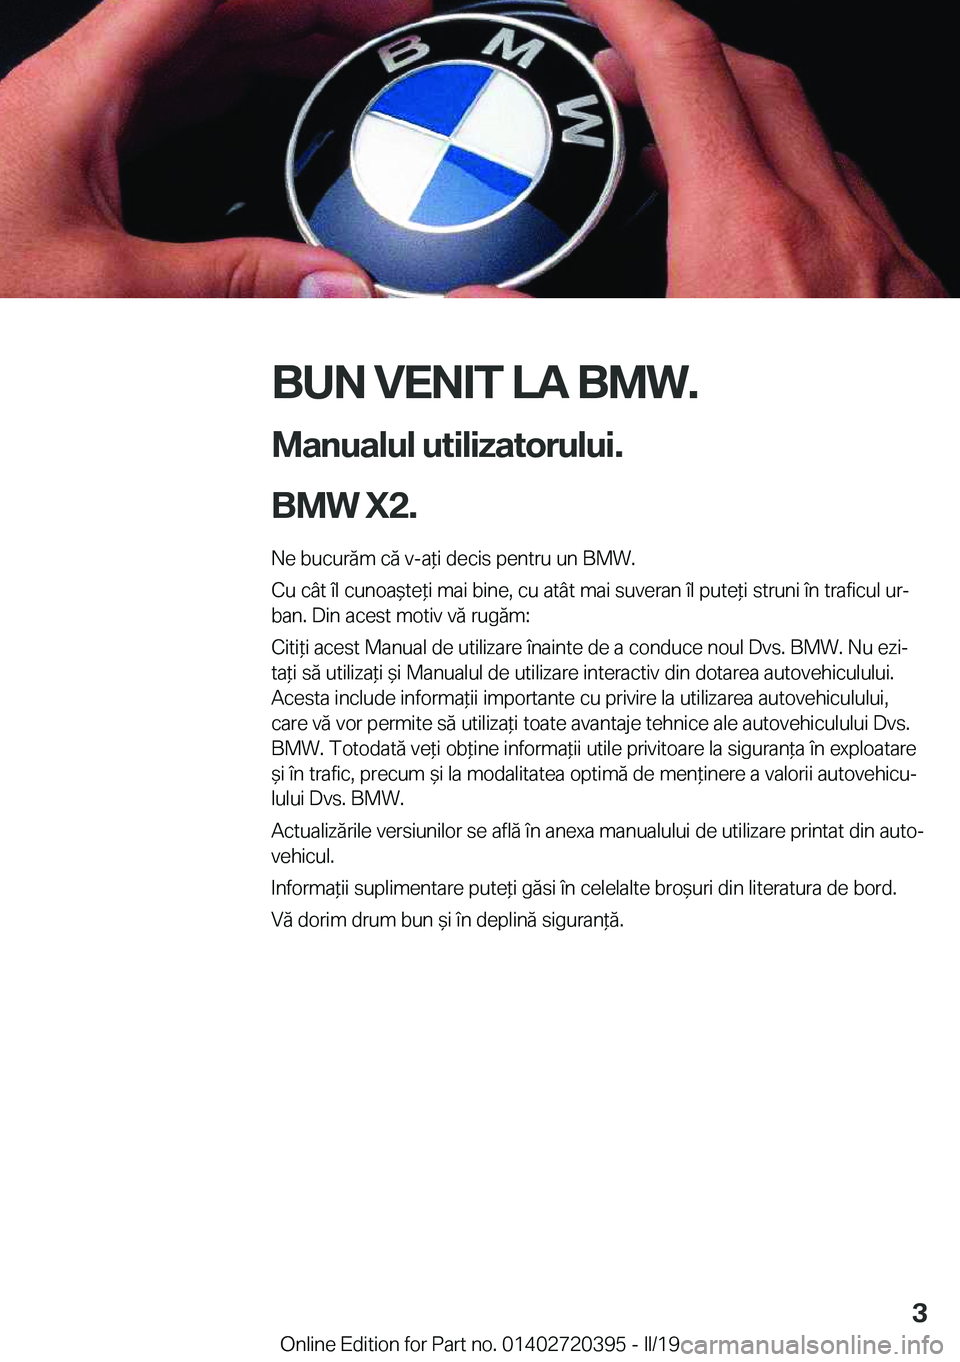 BMW X2 2019  Ghiduri De Utilizare (in Romanian) �B�U�N��V�E�N�I�T��L�A��B�M�W�.�M�a�n�u�a�l�u�l��u�t�i�l�i�z�a�t�o�r�u�l�u�i�.
�B�M�W��X�2�. �N�e��b�u�c�u�r�